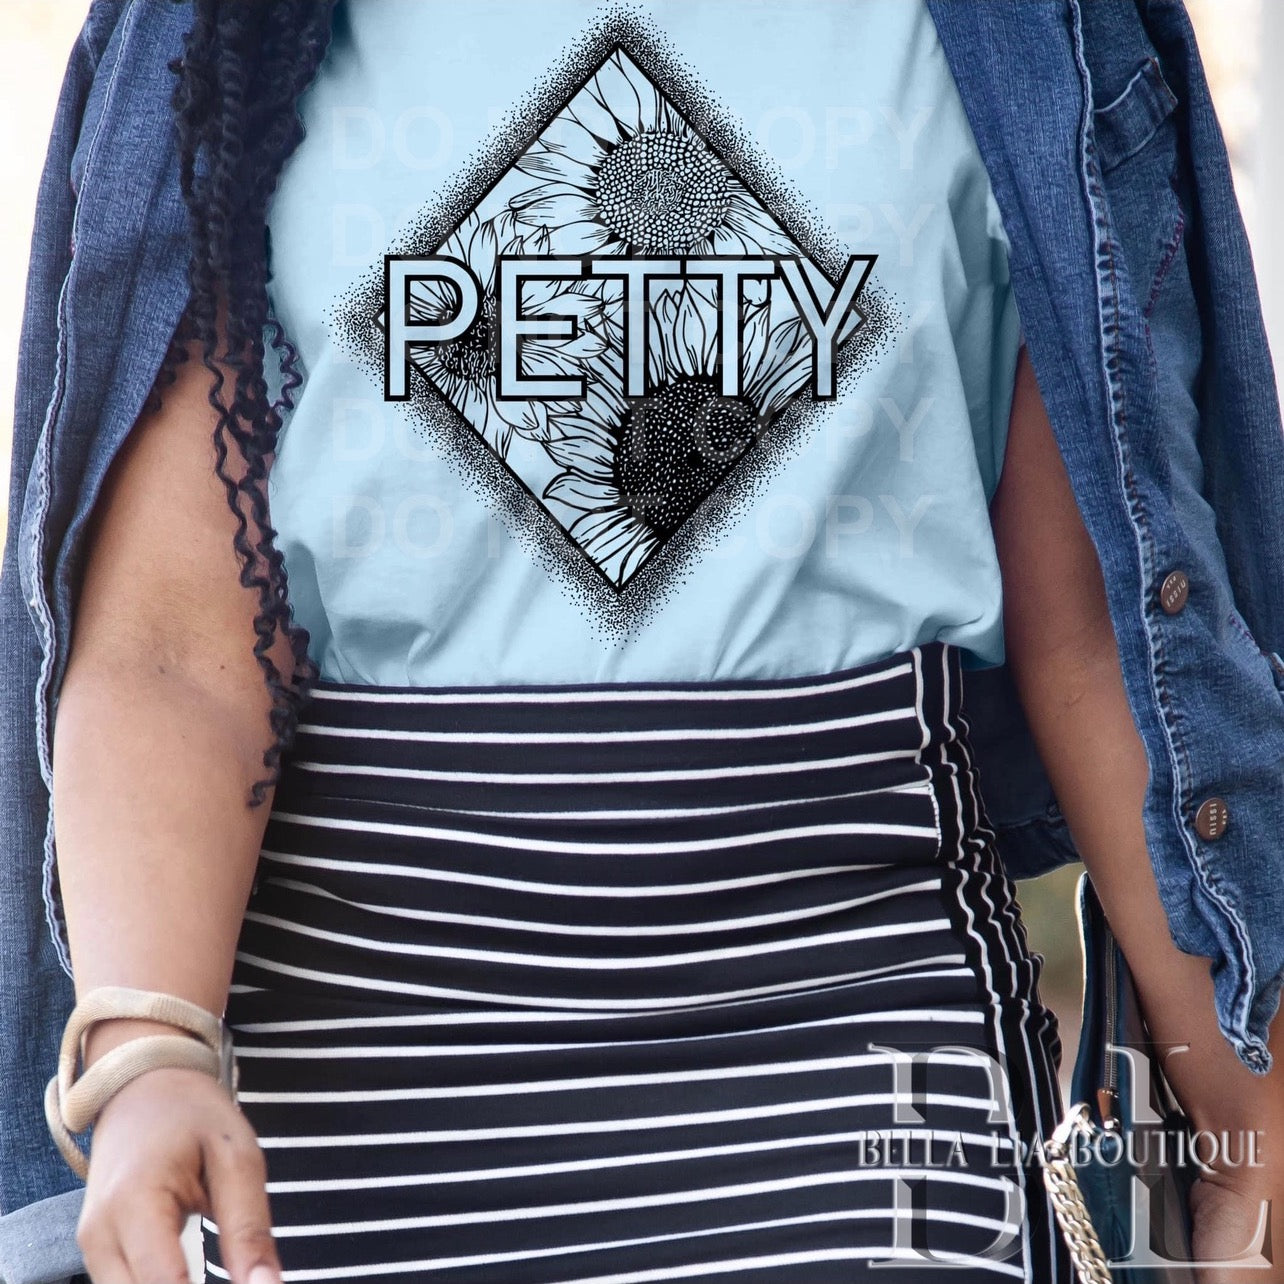 Petty Sunflowers Graphic Tee or Sweatshirt - Bella Lia Boutique